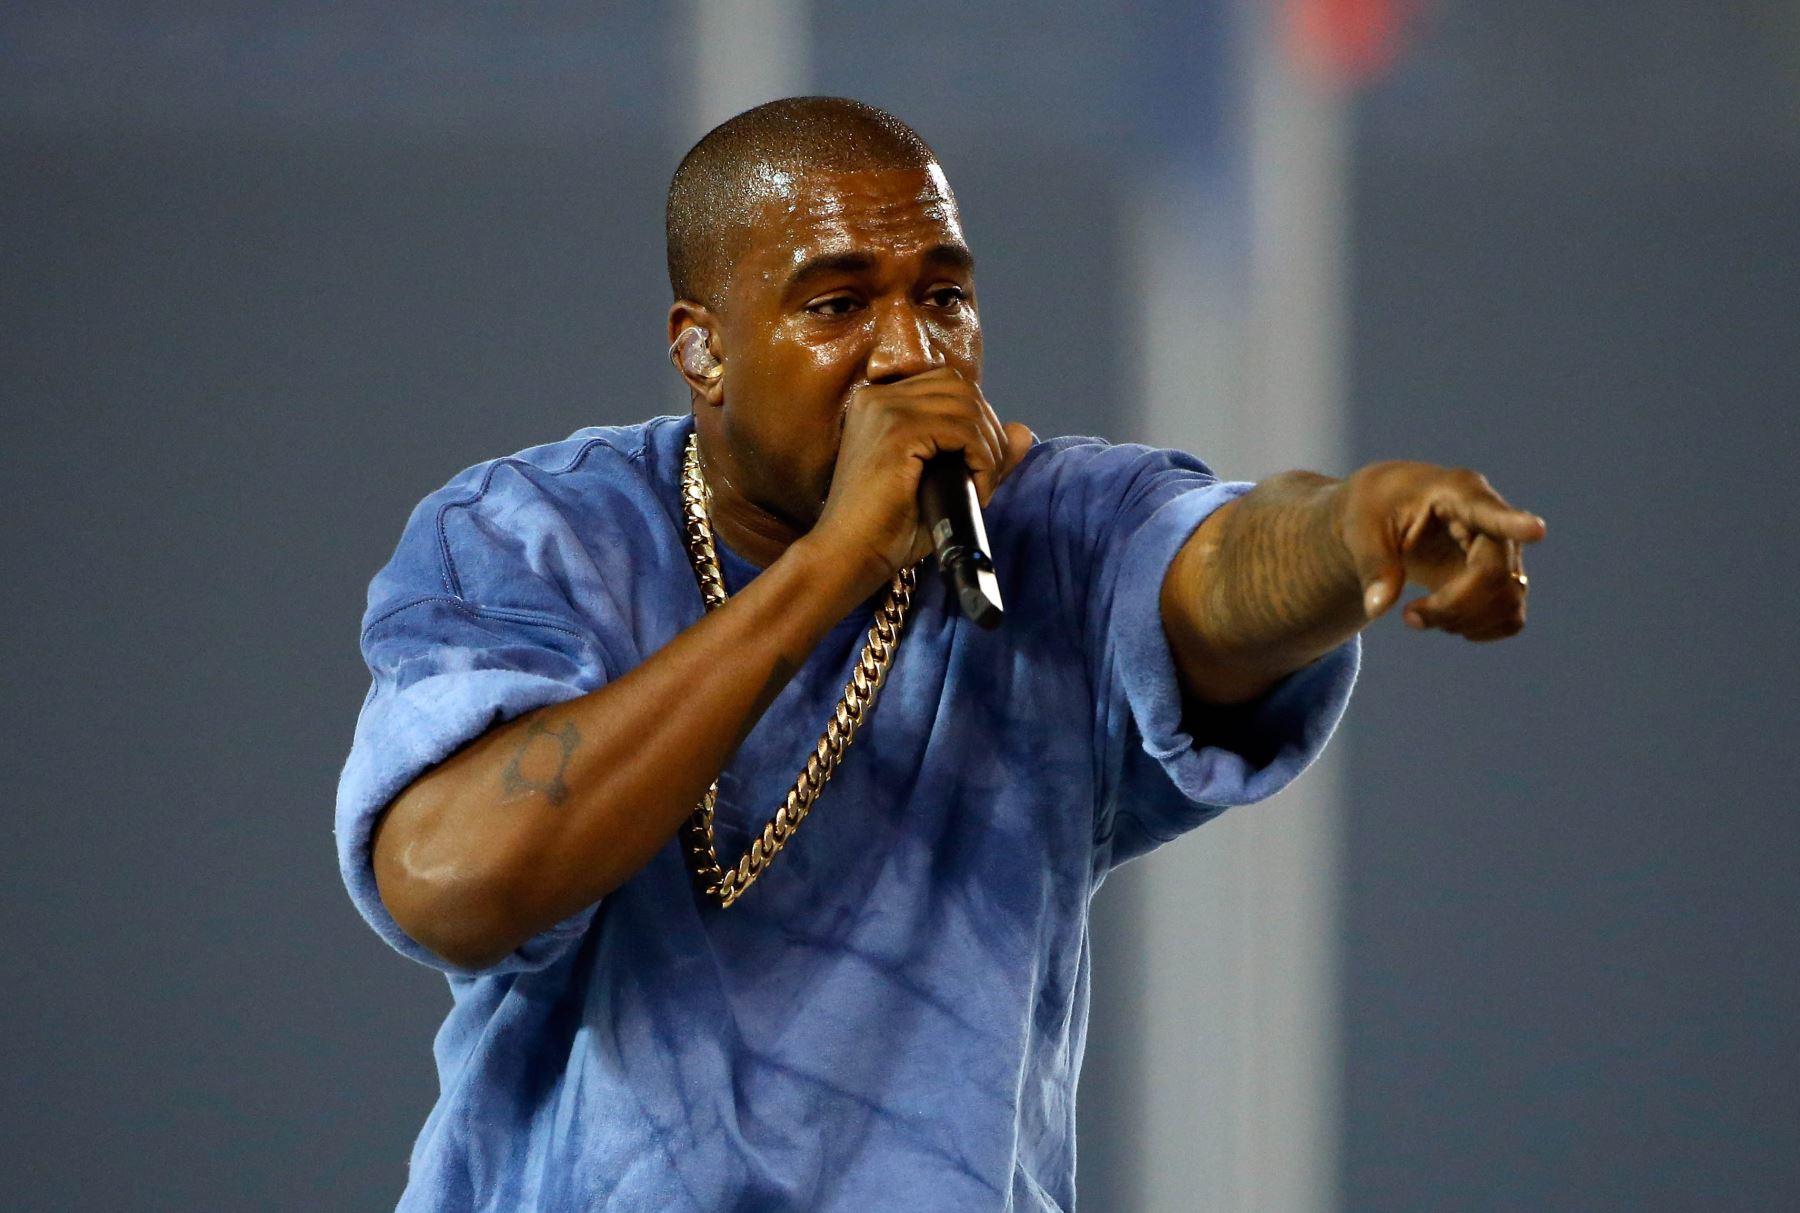 Instagram bloquea cuenta de Kanye West por 24 hrs